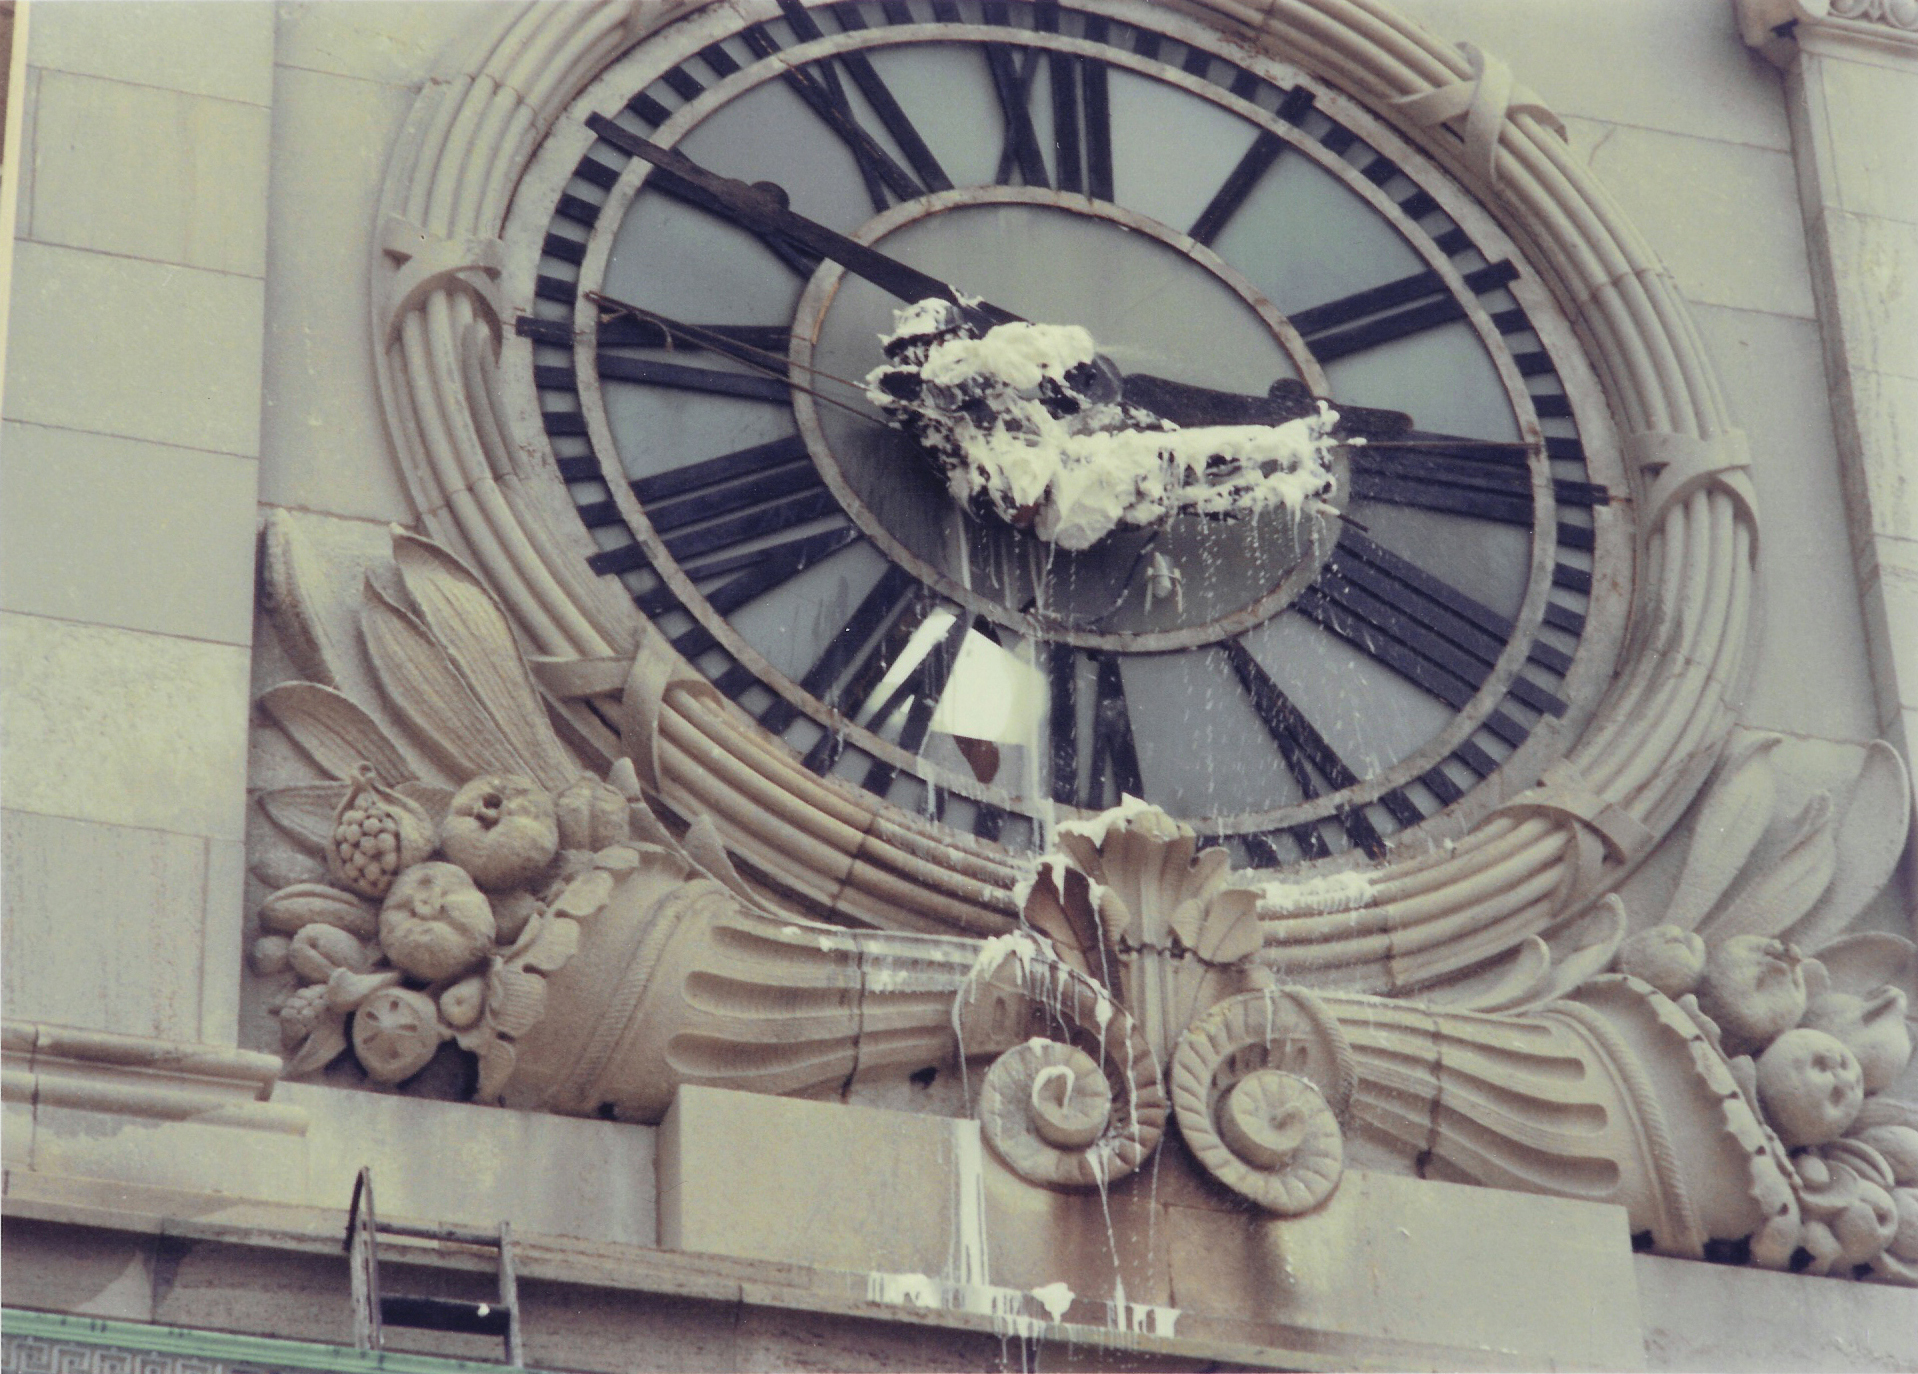 Gordon Matta-Clark Clockshower, 1973. Courtesy The Estate of Gordon Matta-Clark et David Zwirner, New York / Londres / Hong Kong. © 2018 The Estate of Gordon Matta-Clark / ADAGP, Paris